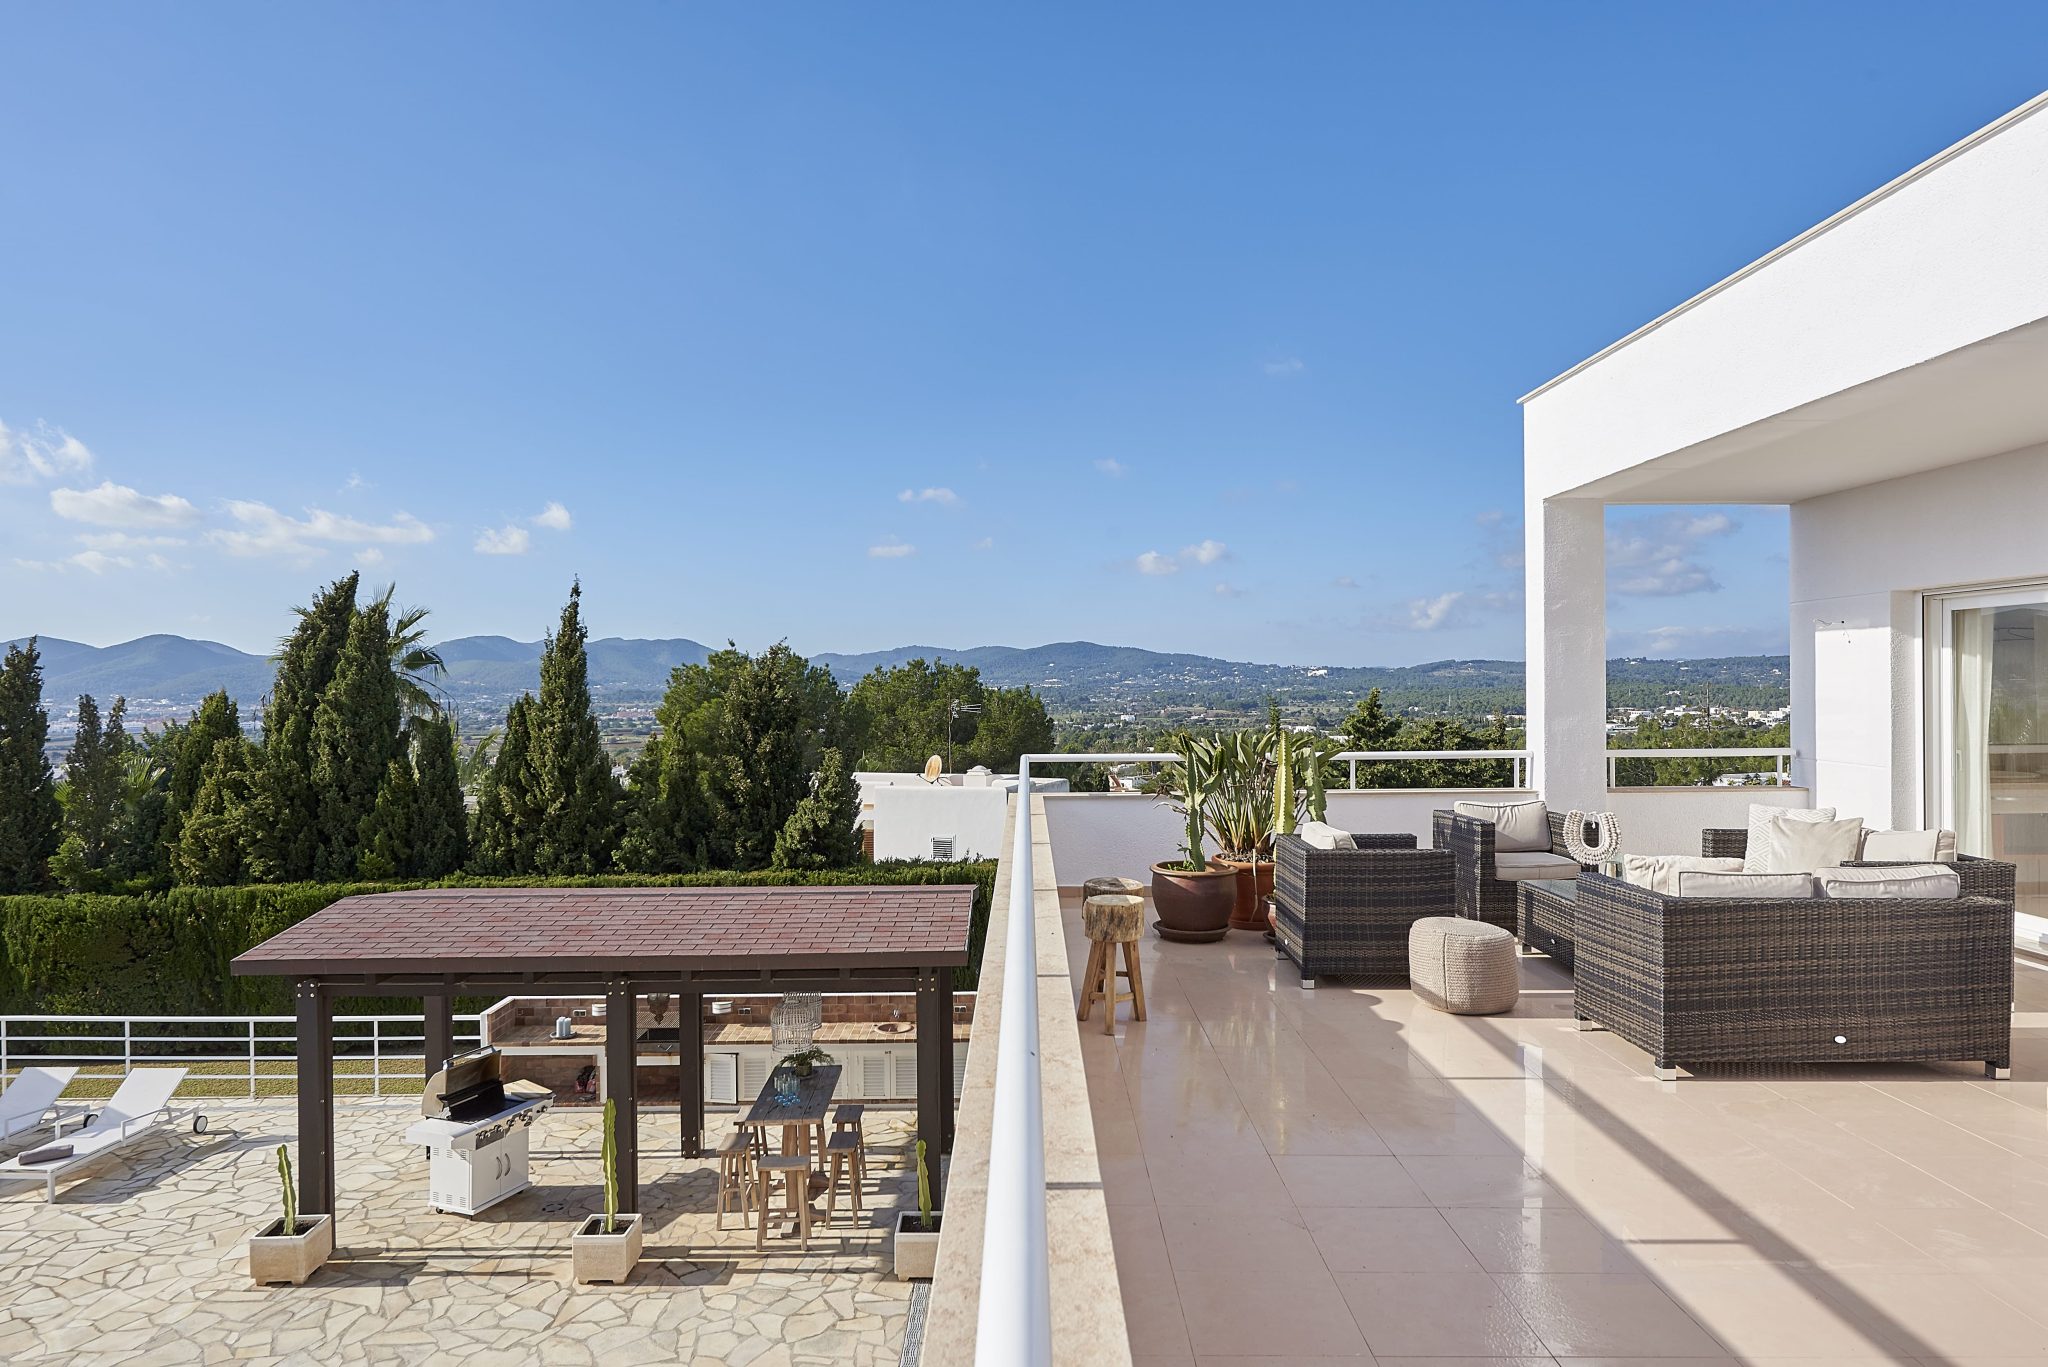 Alquiler casas en Ibiza con vistas